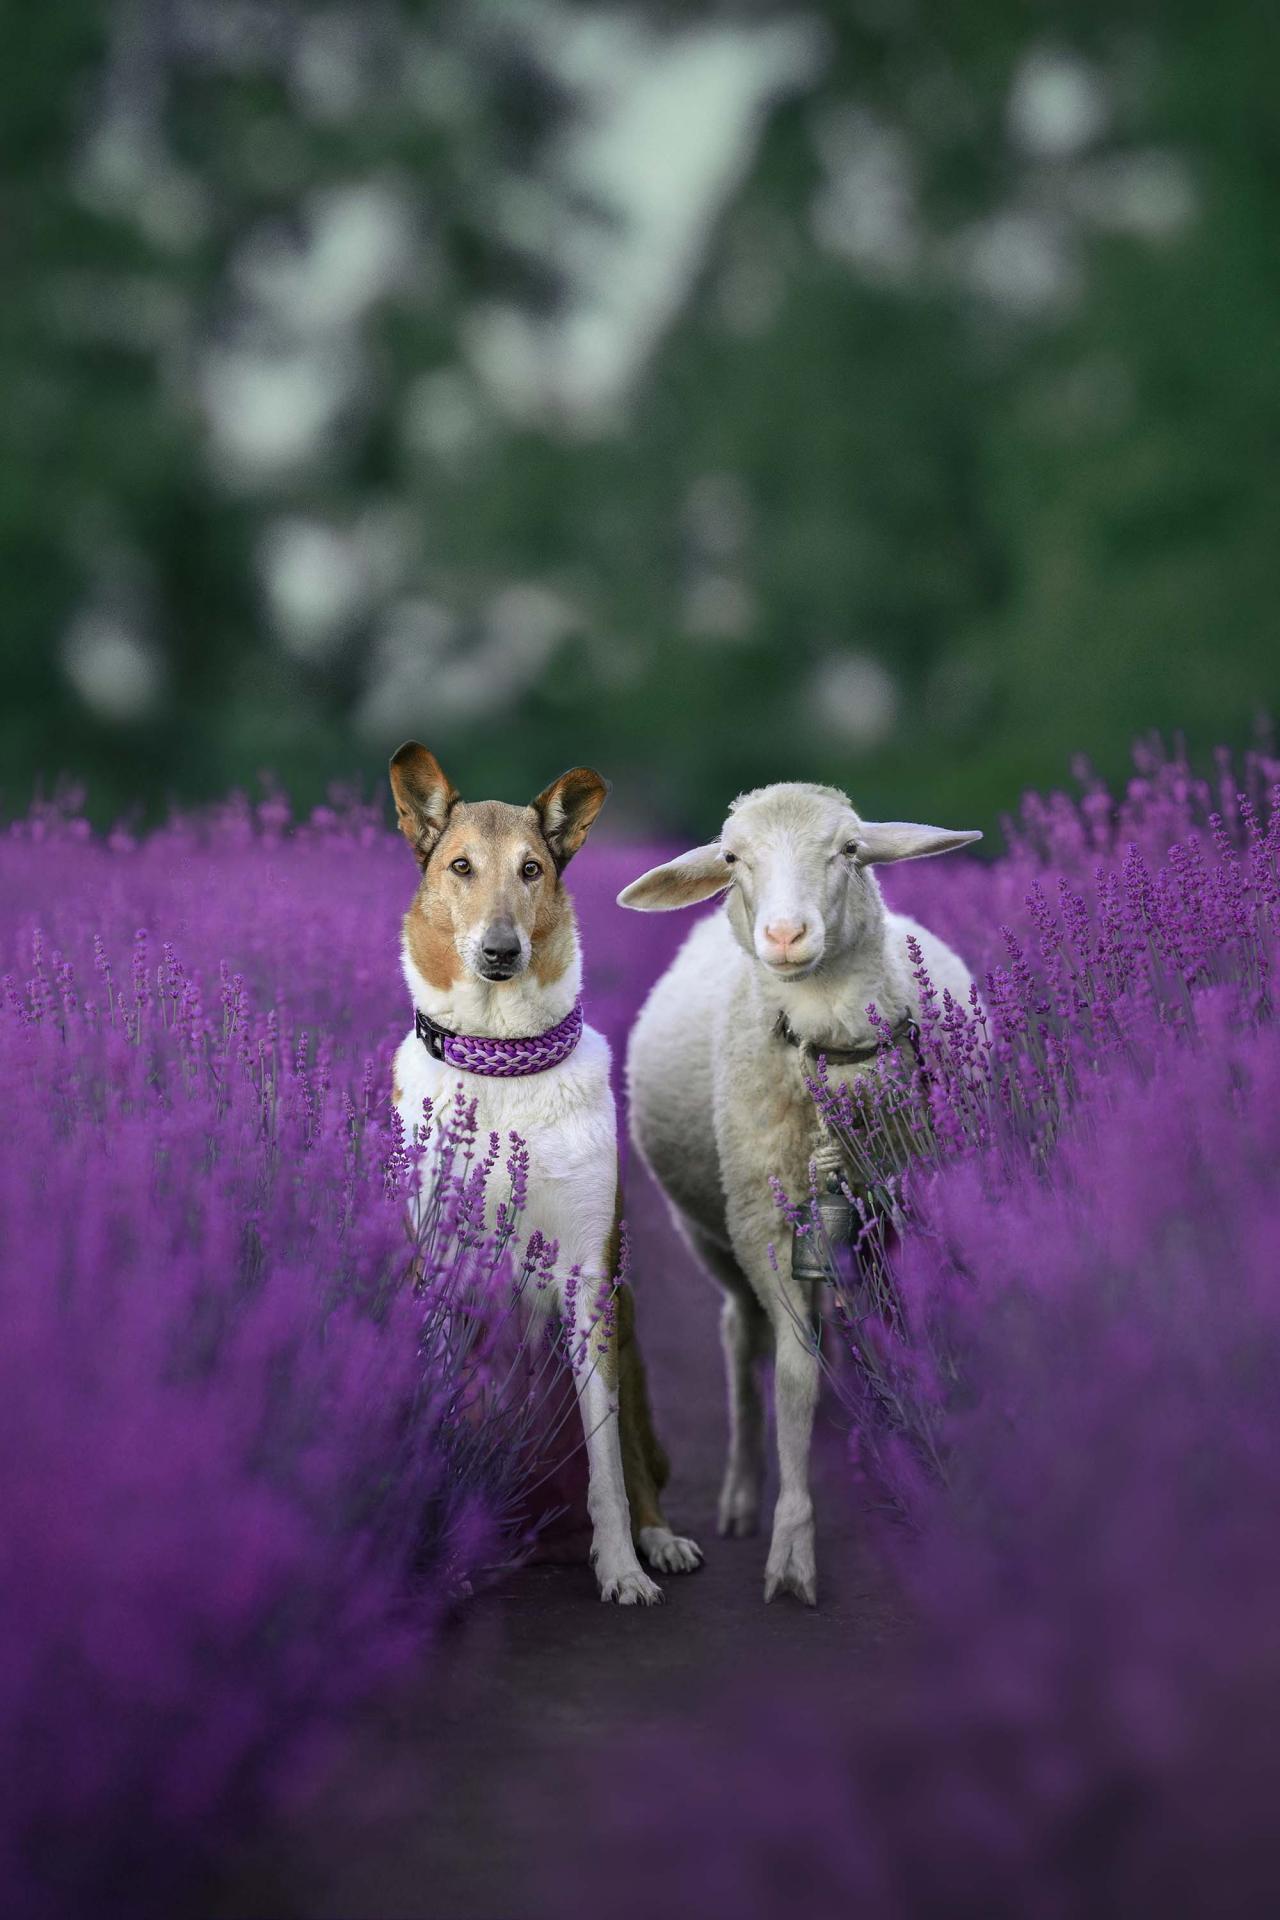 New York Photography Awards Winner - Shepherd and his sheep